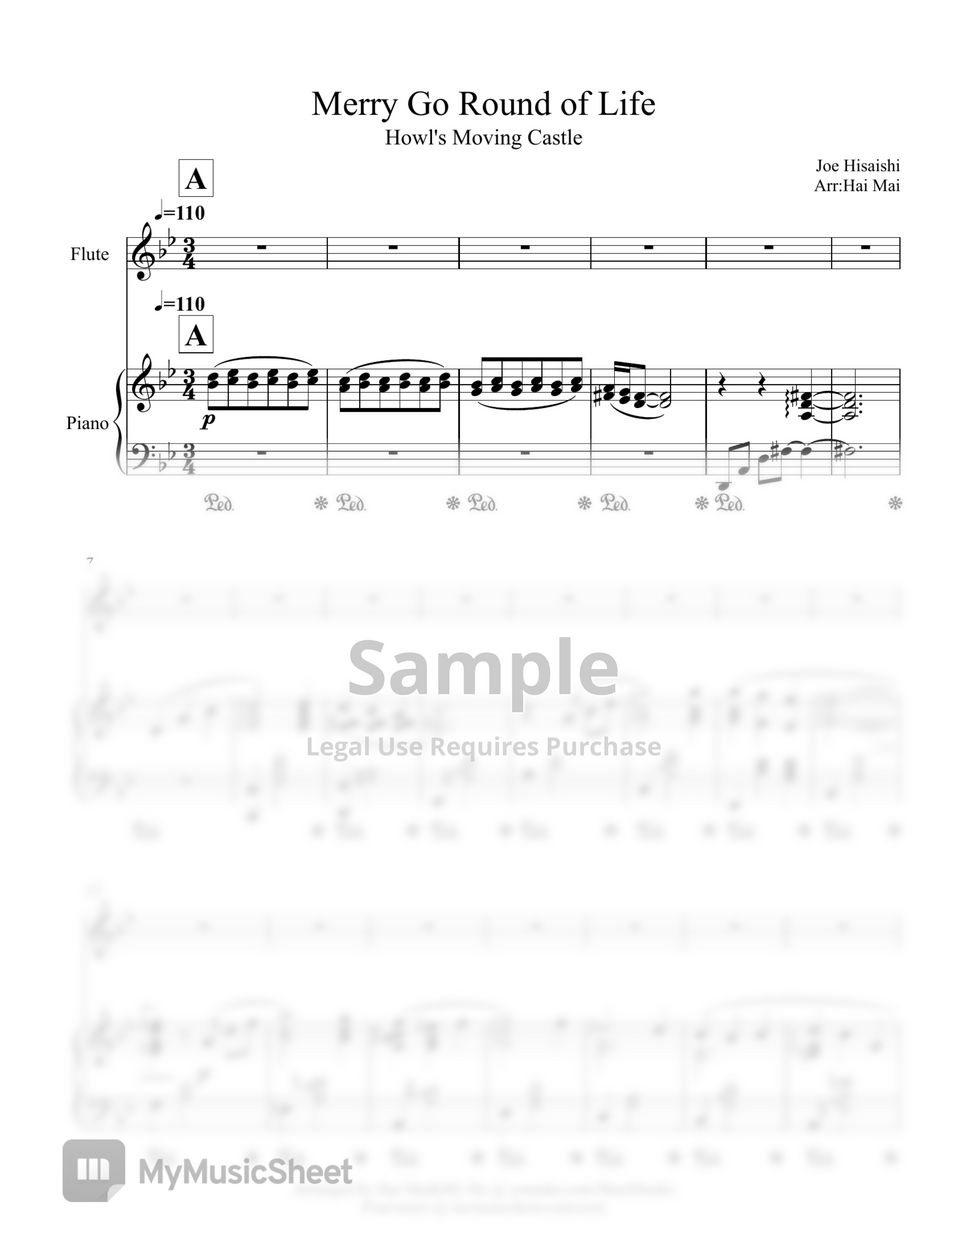 Joe Hisaishi - Merry Go Round of Life for Flute solo and Piano Accompaniment by Hai Mai